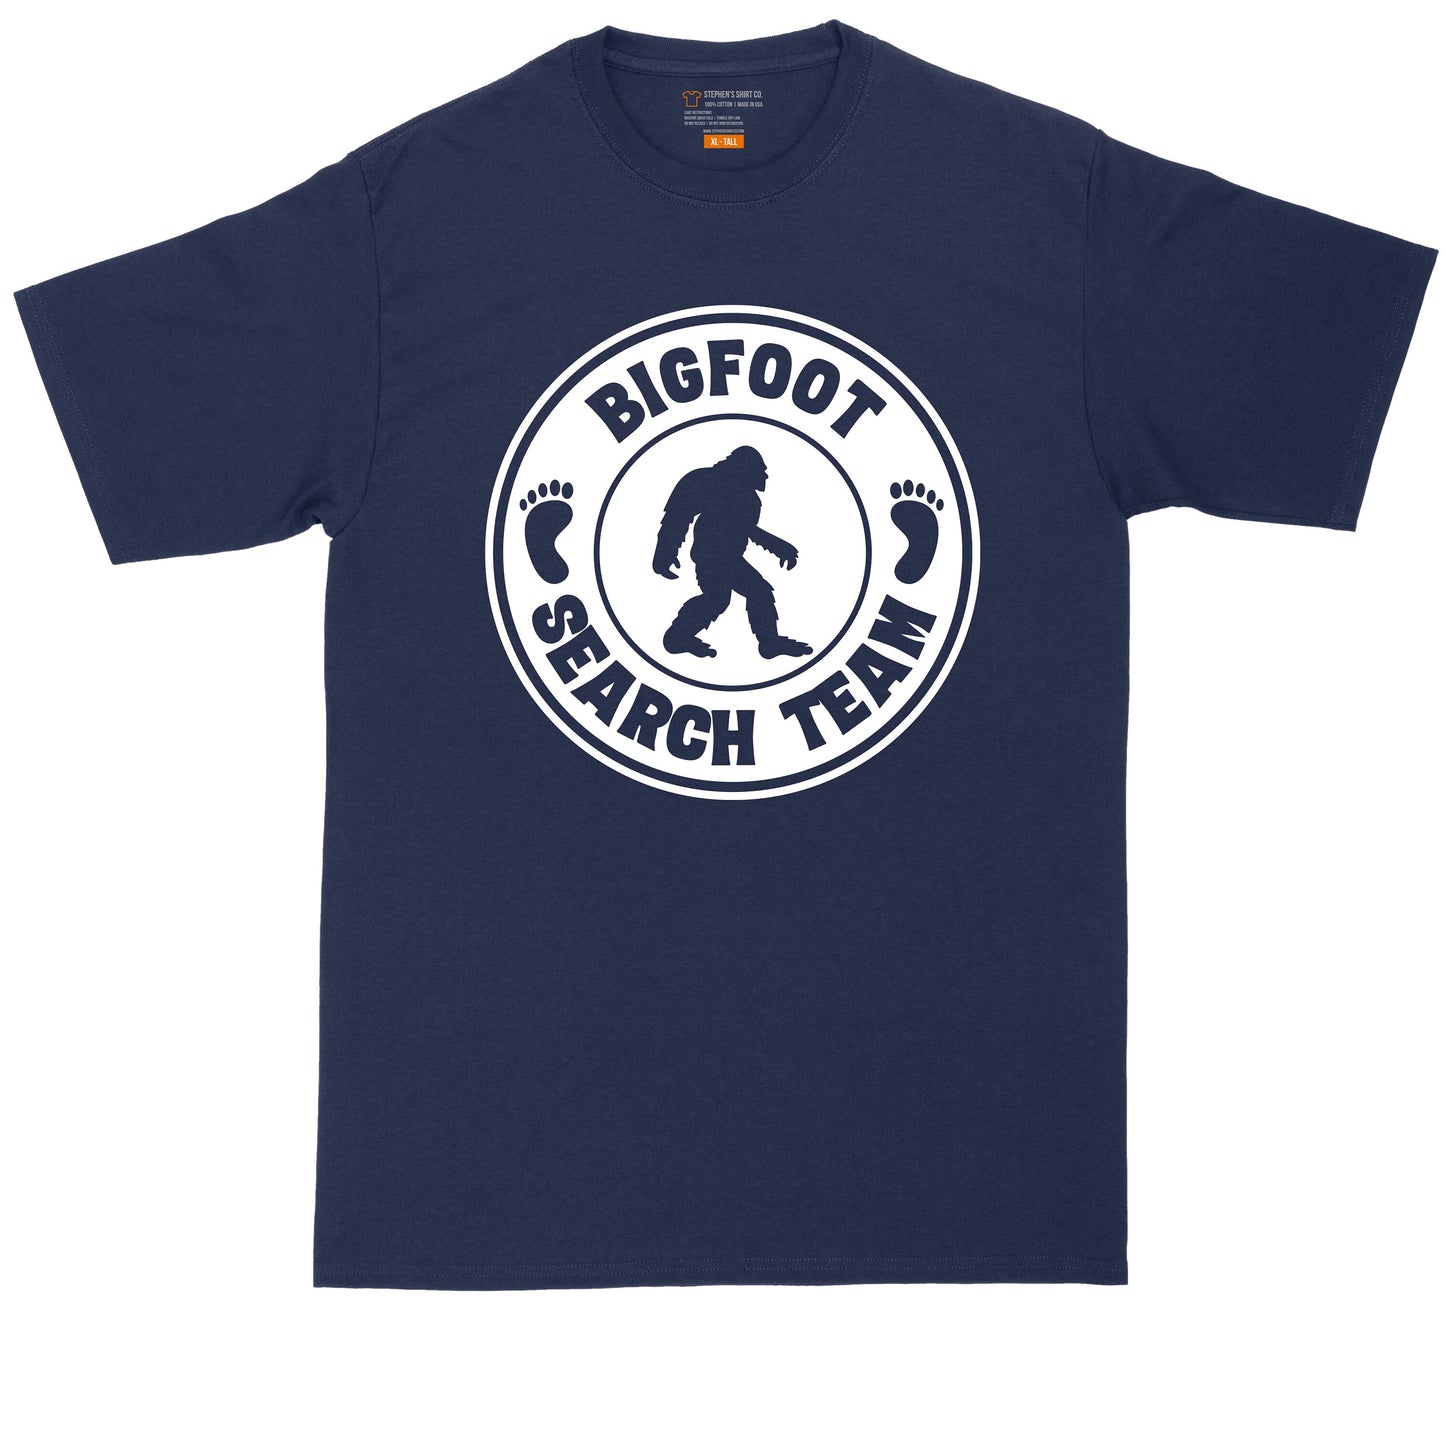 Bigfoot Search Team | Big and Tall Men T Shirt | Funny T-Shirt | Gamer Shirt | Graphic T-Shirt